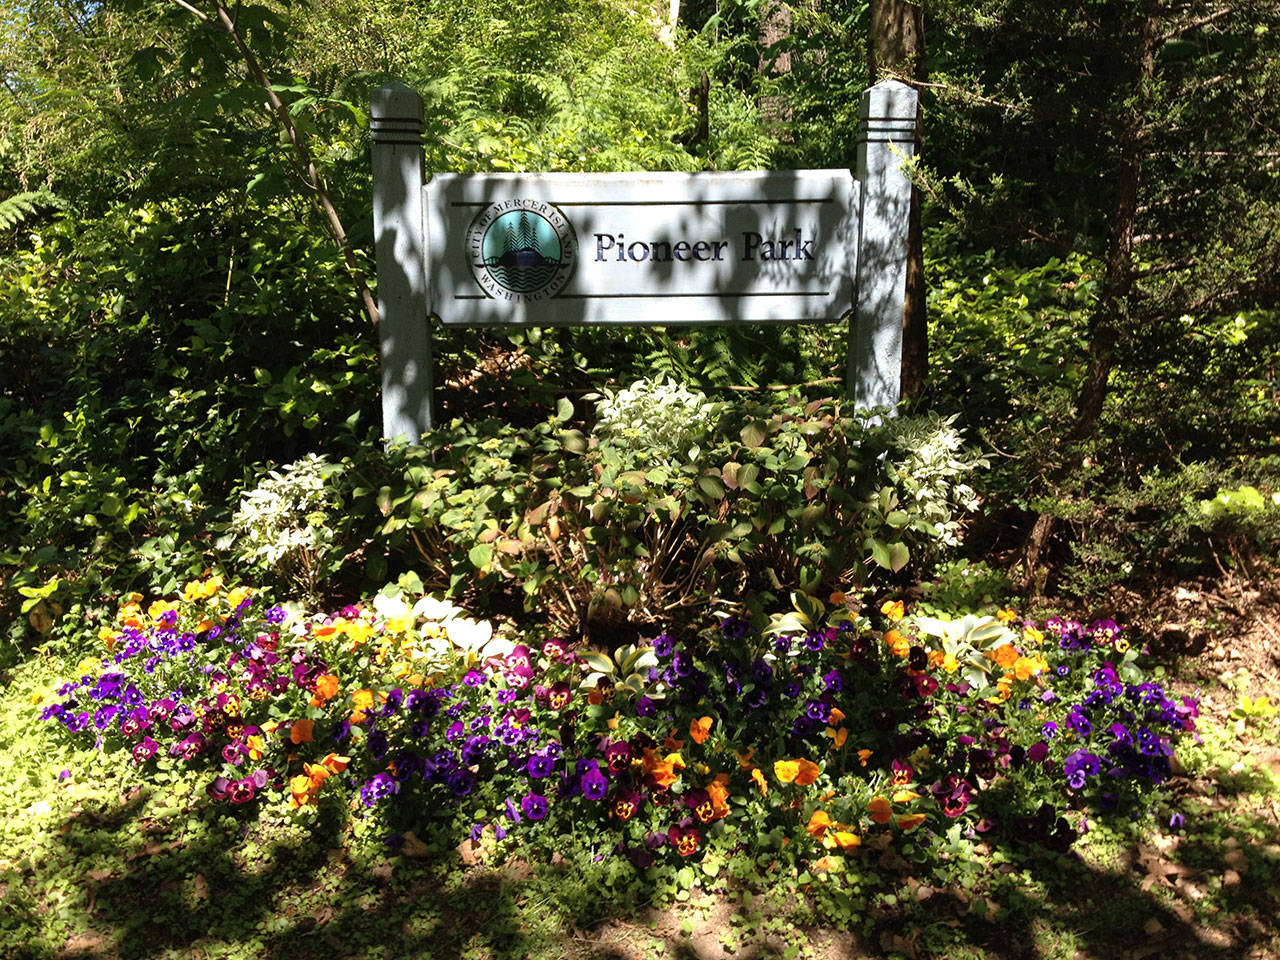 Pioneer Park sign. Photo courtesy of Meg Lippert